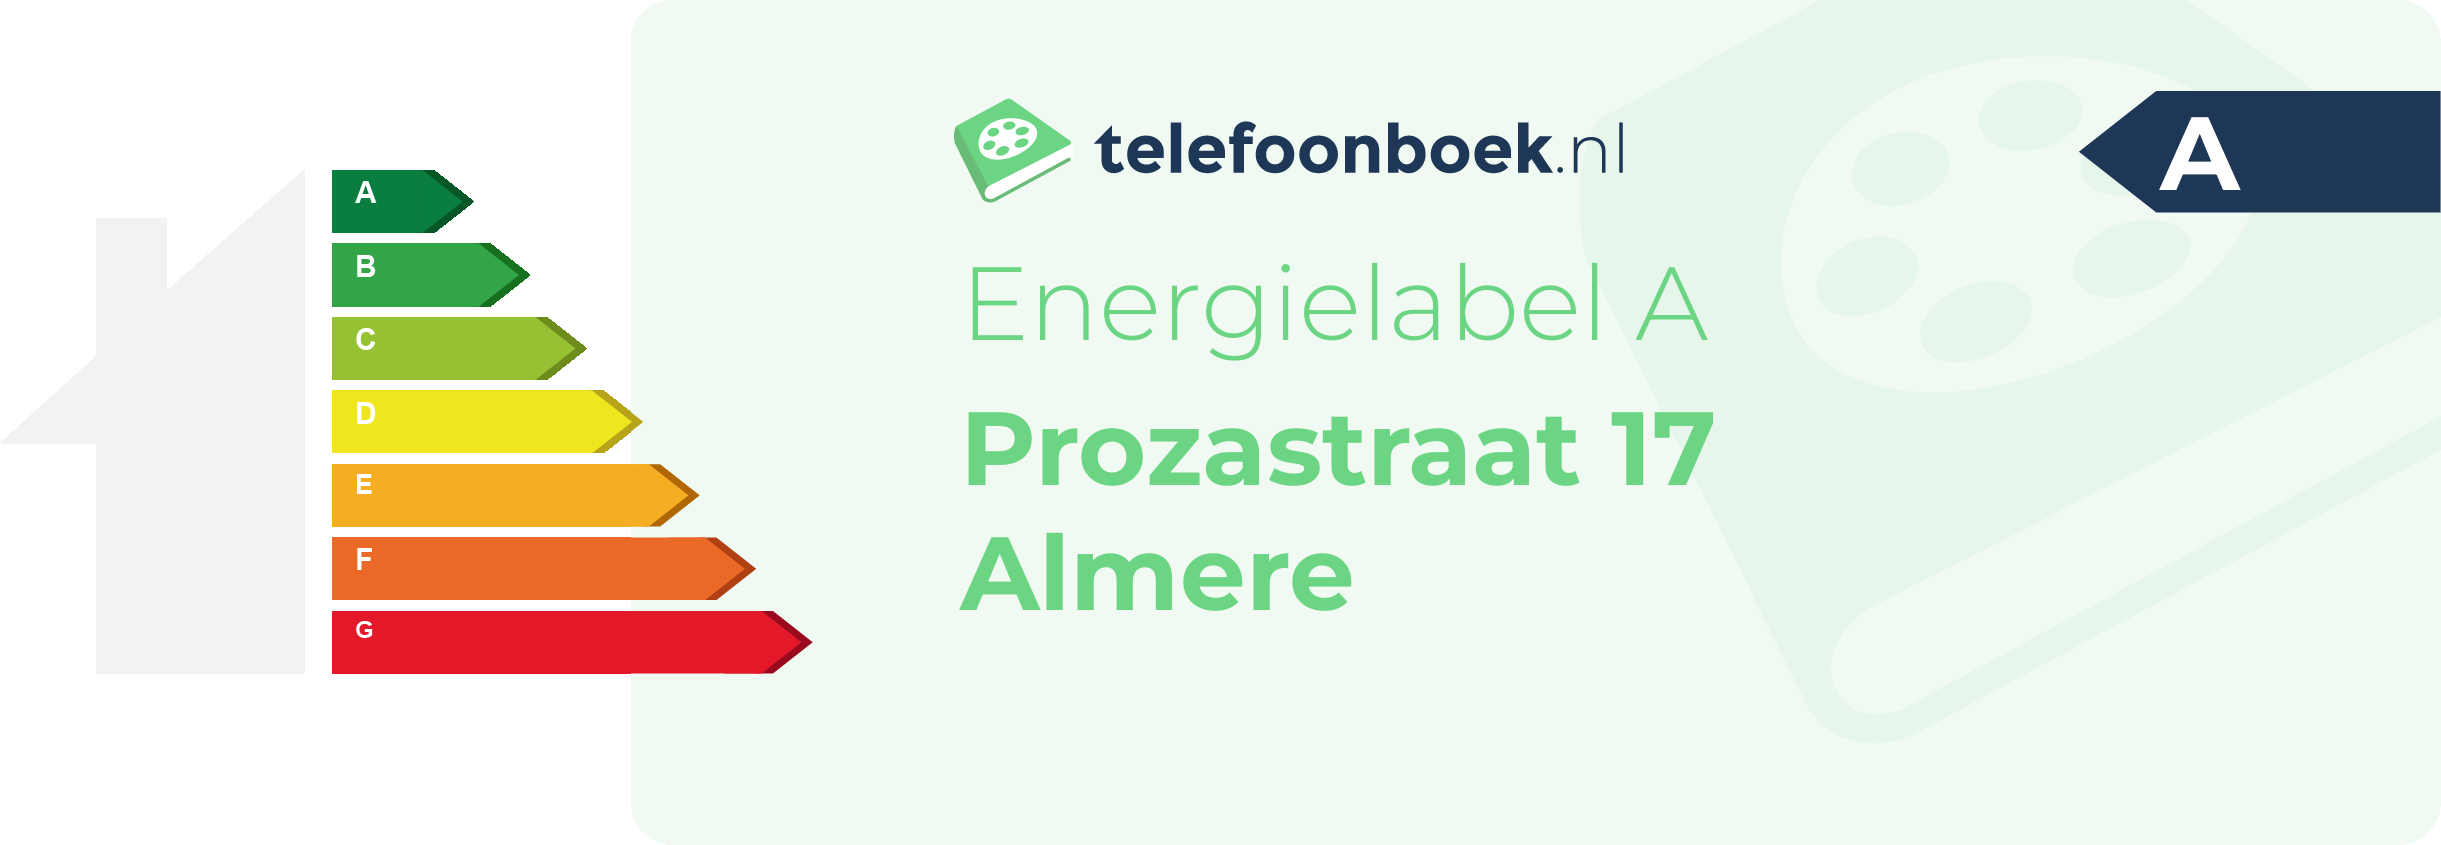 Energielabel Prozastraat 17 Almere